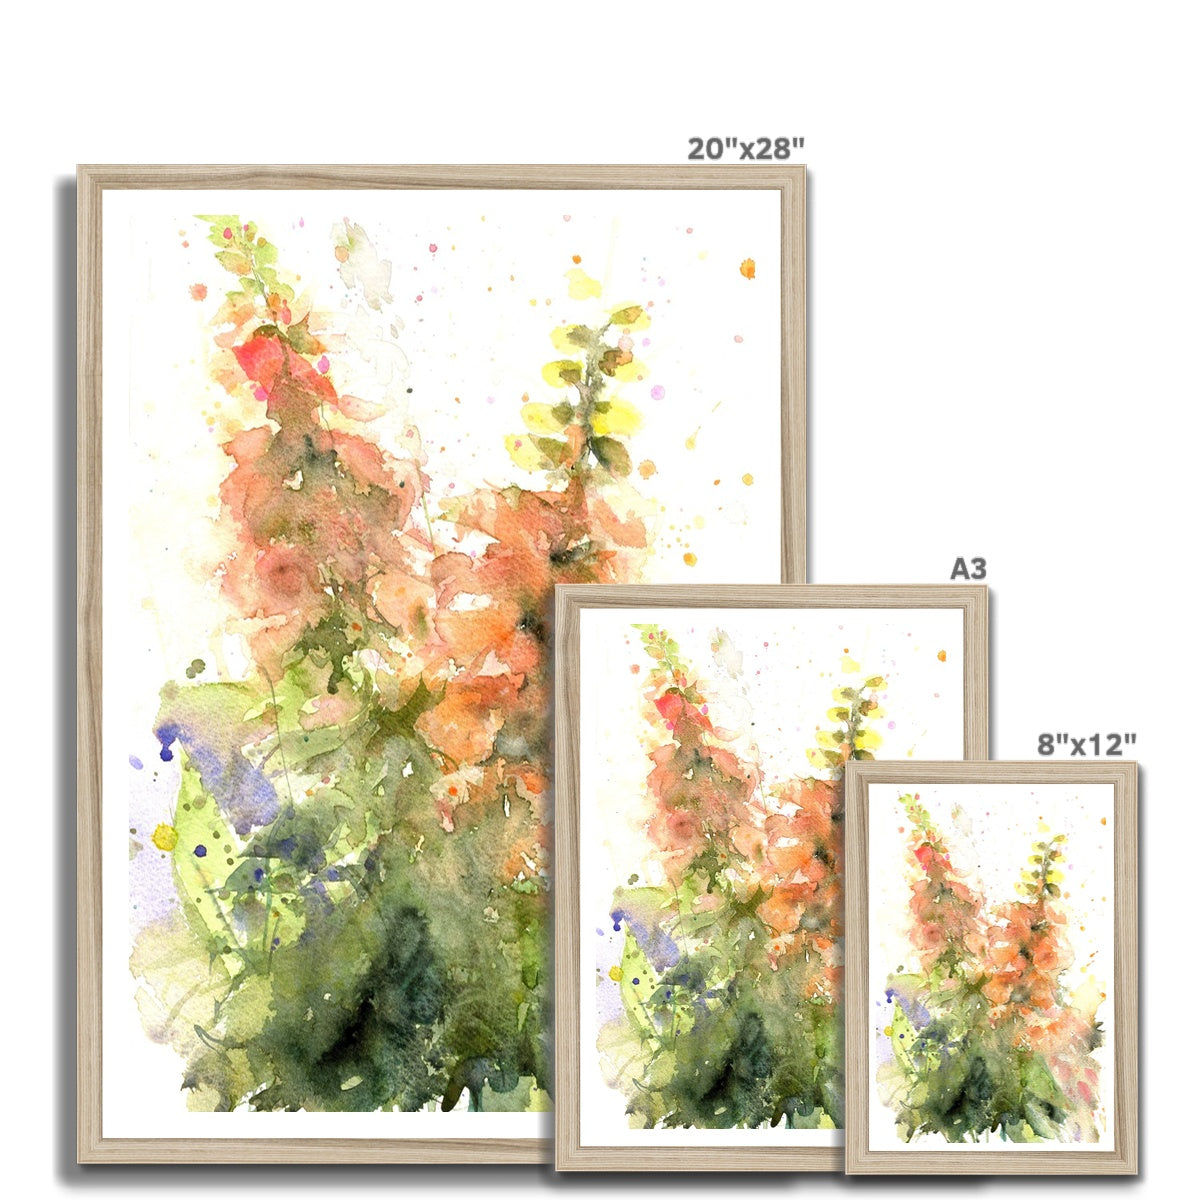 Peach foxgloves Framed Print - Jen Buckley Art limited edition animal art prints